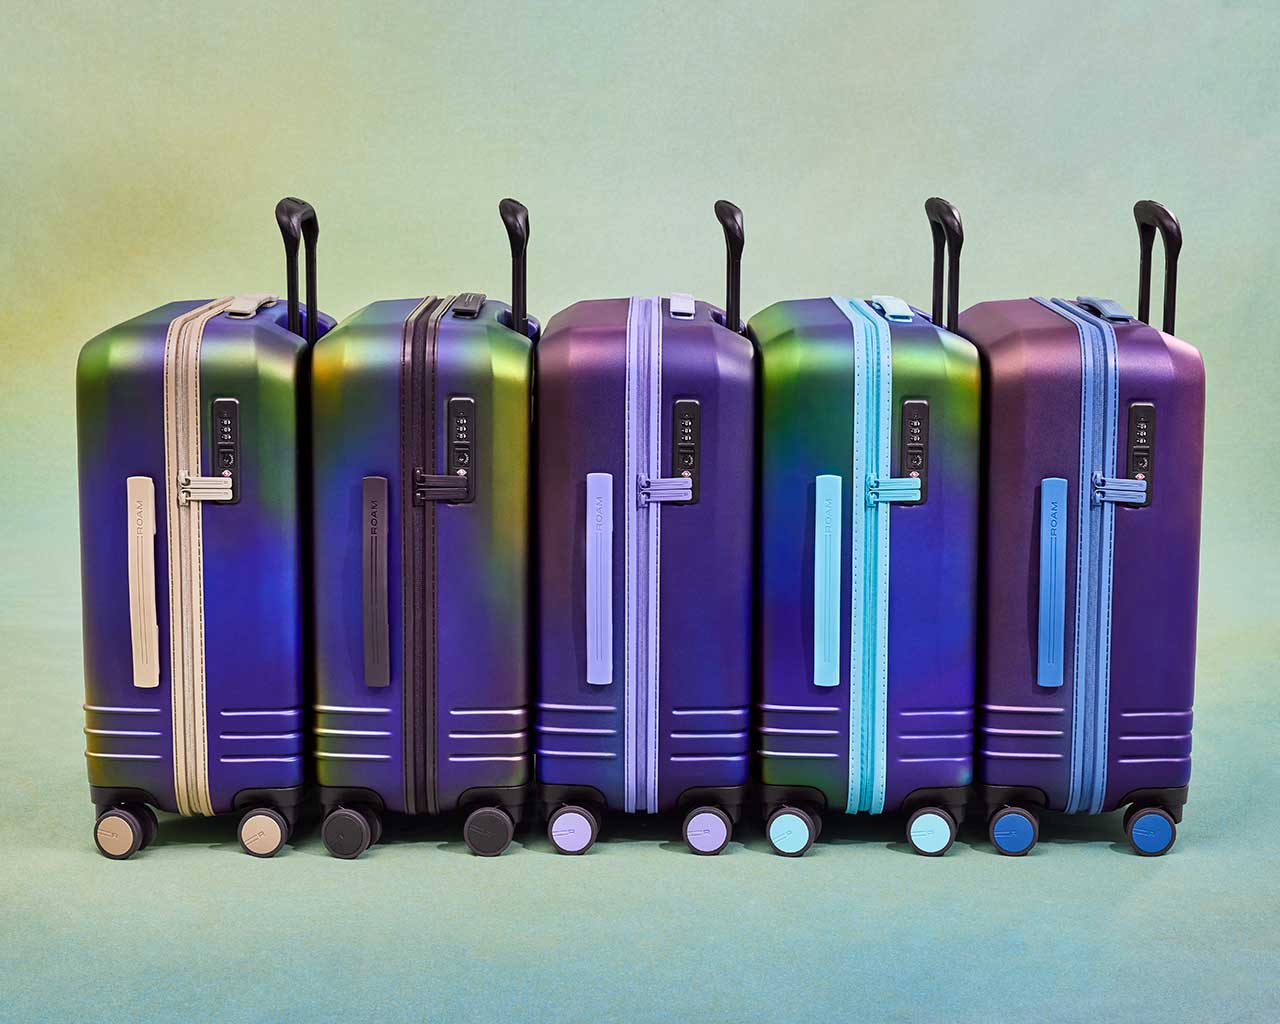 Amanda Wachob x ROAM Release Beetle-Inspired, Hand-Painted Luggage